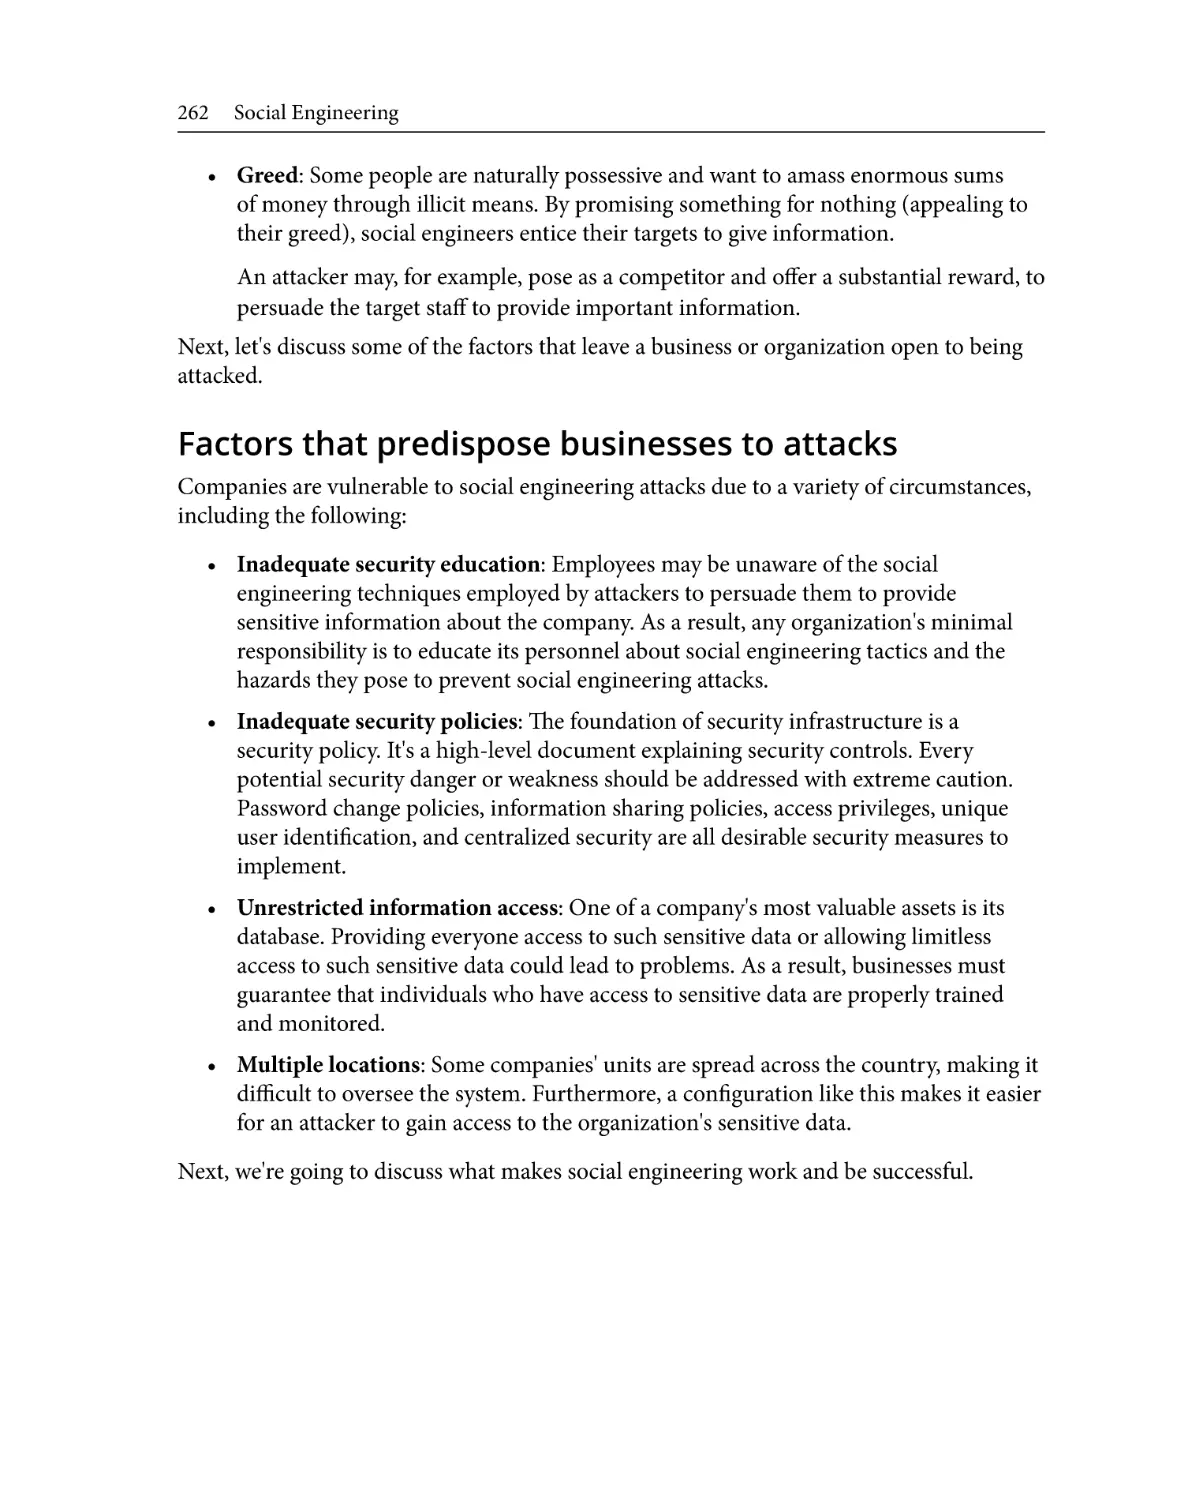 Factors that predispose businesses to attacks